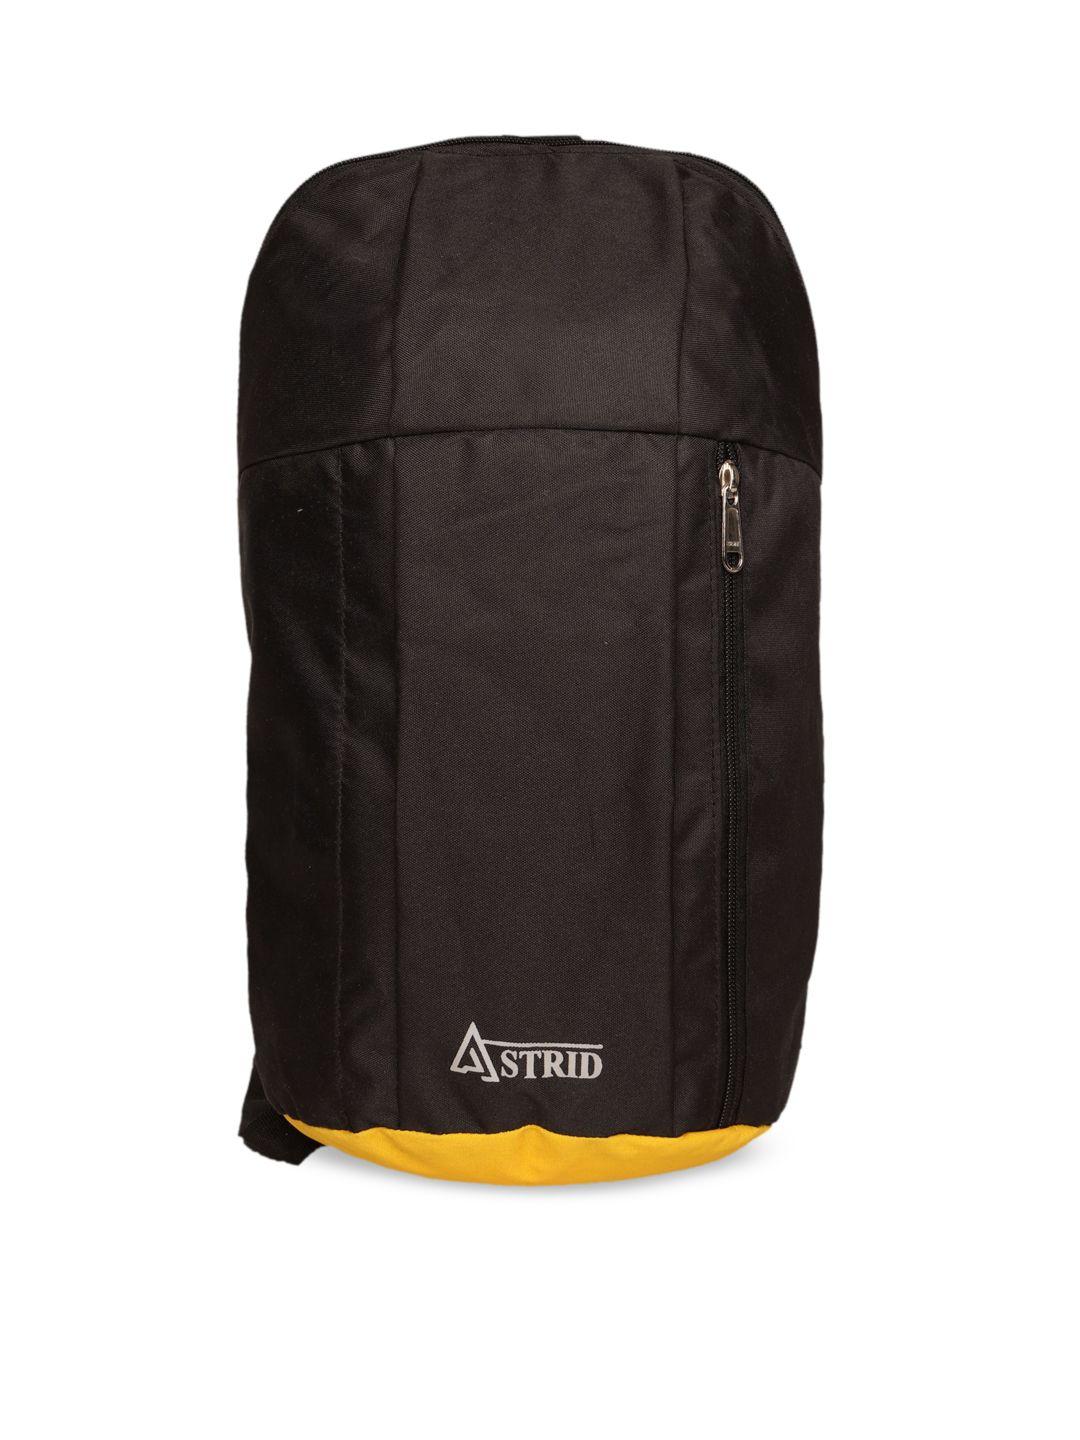 astrid boys black & yellow backpack